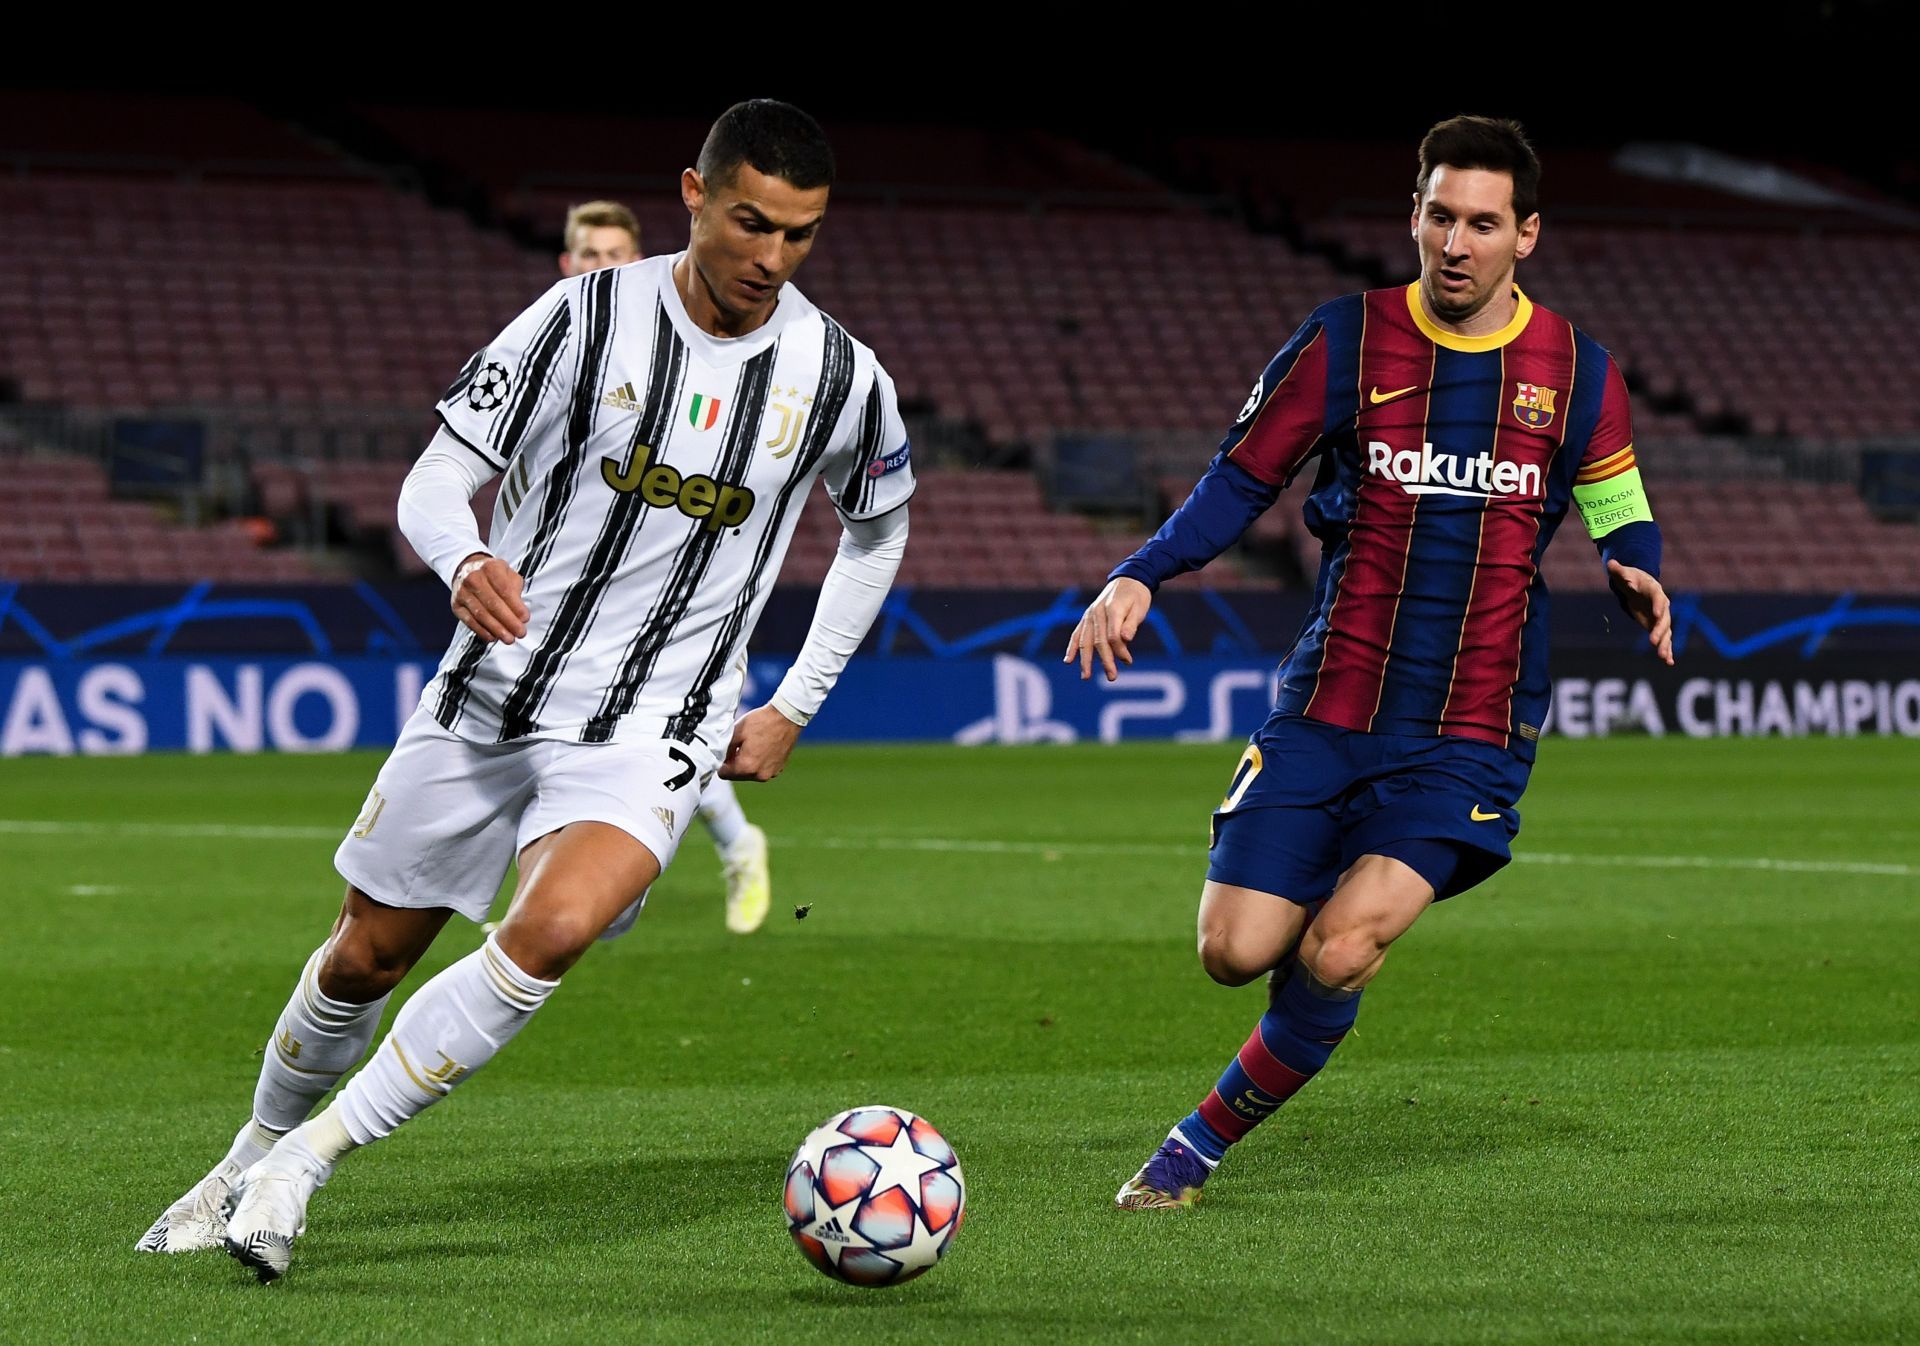 Cristiano Ronaldo (left) and Lionel Messi have scored a lot of goals against Sevilla.